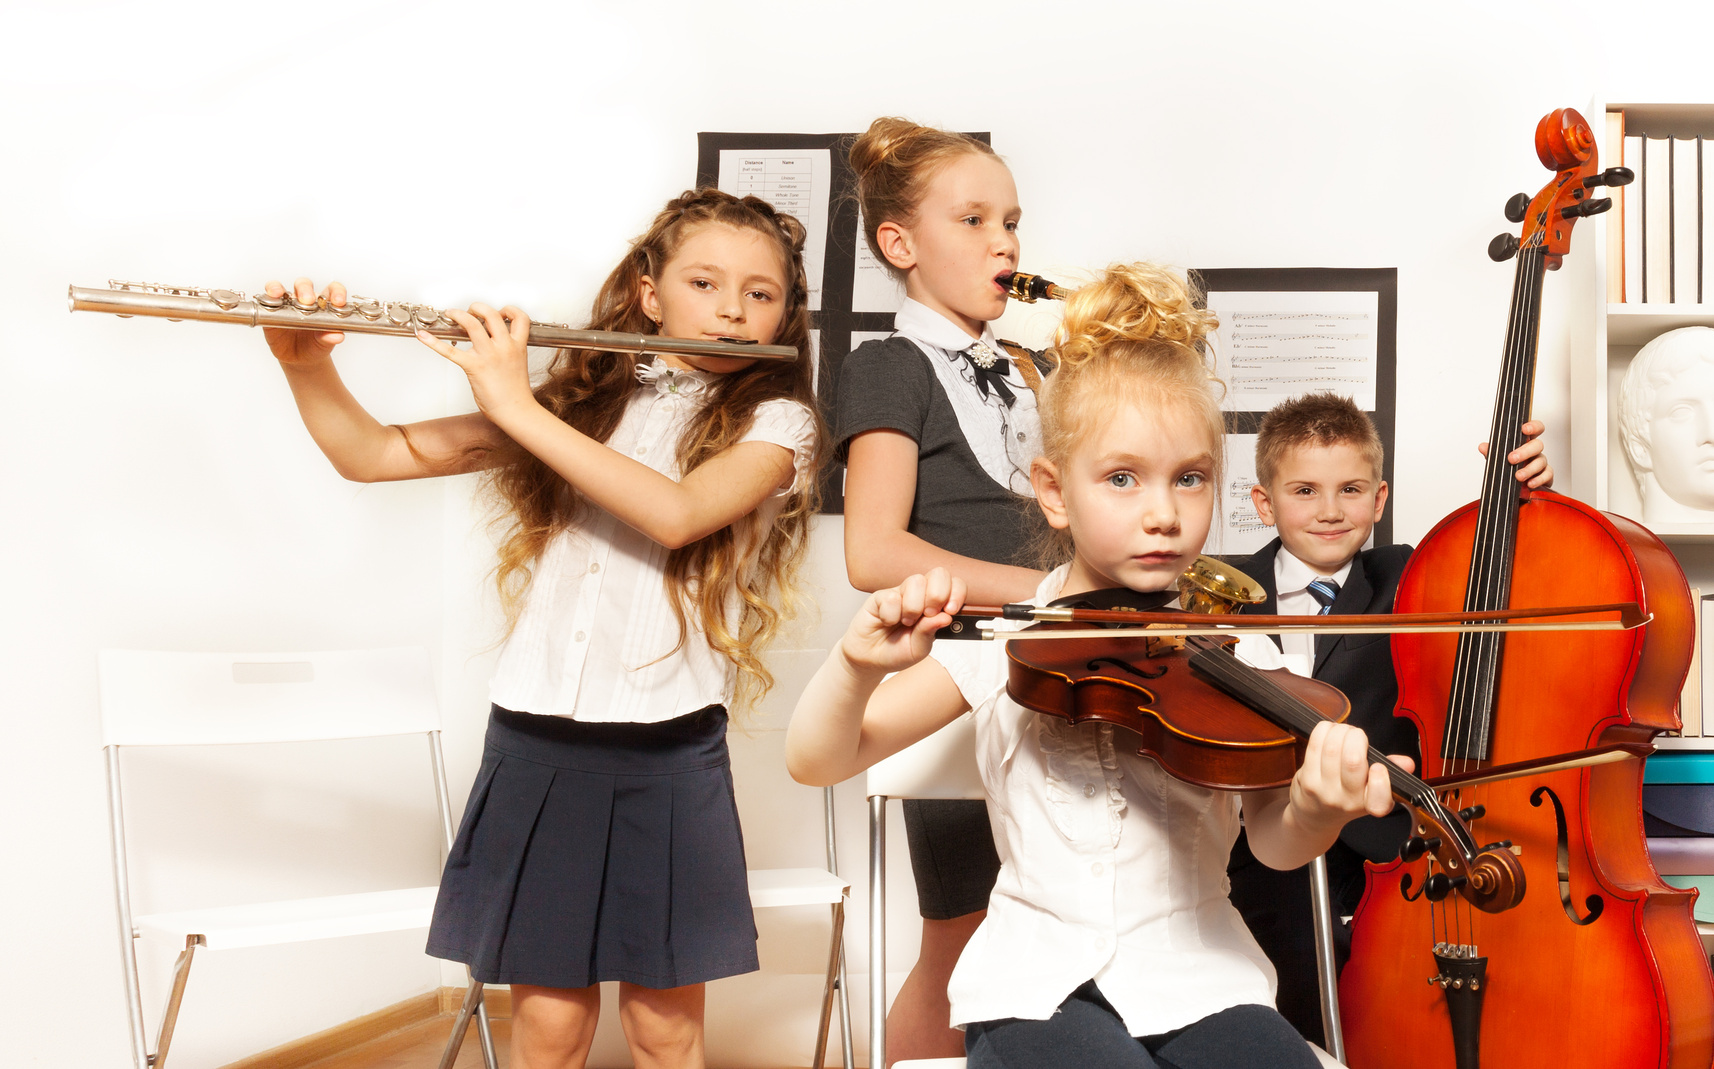 School Children Play Musical Instruments Together